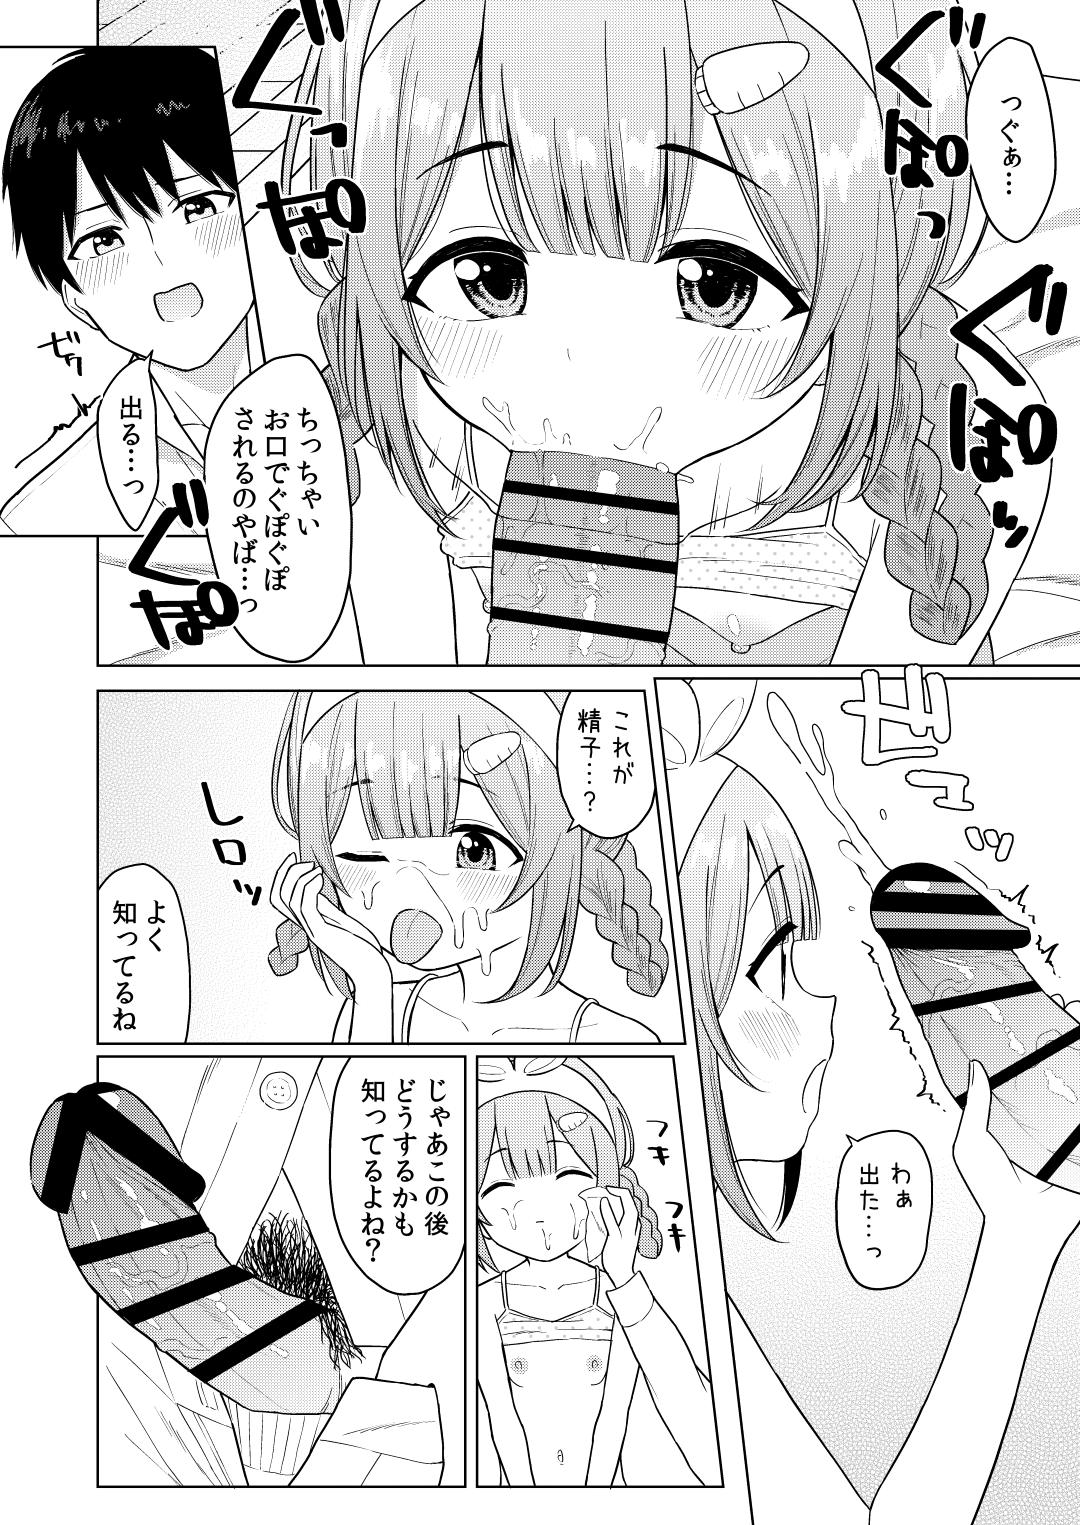 Licking Ippai Shaberu Kimi ga Suki - I love you who talk a lot. - Nijisanji Story - Page 13